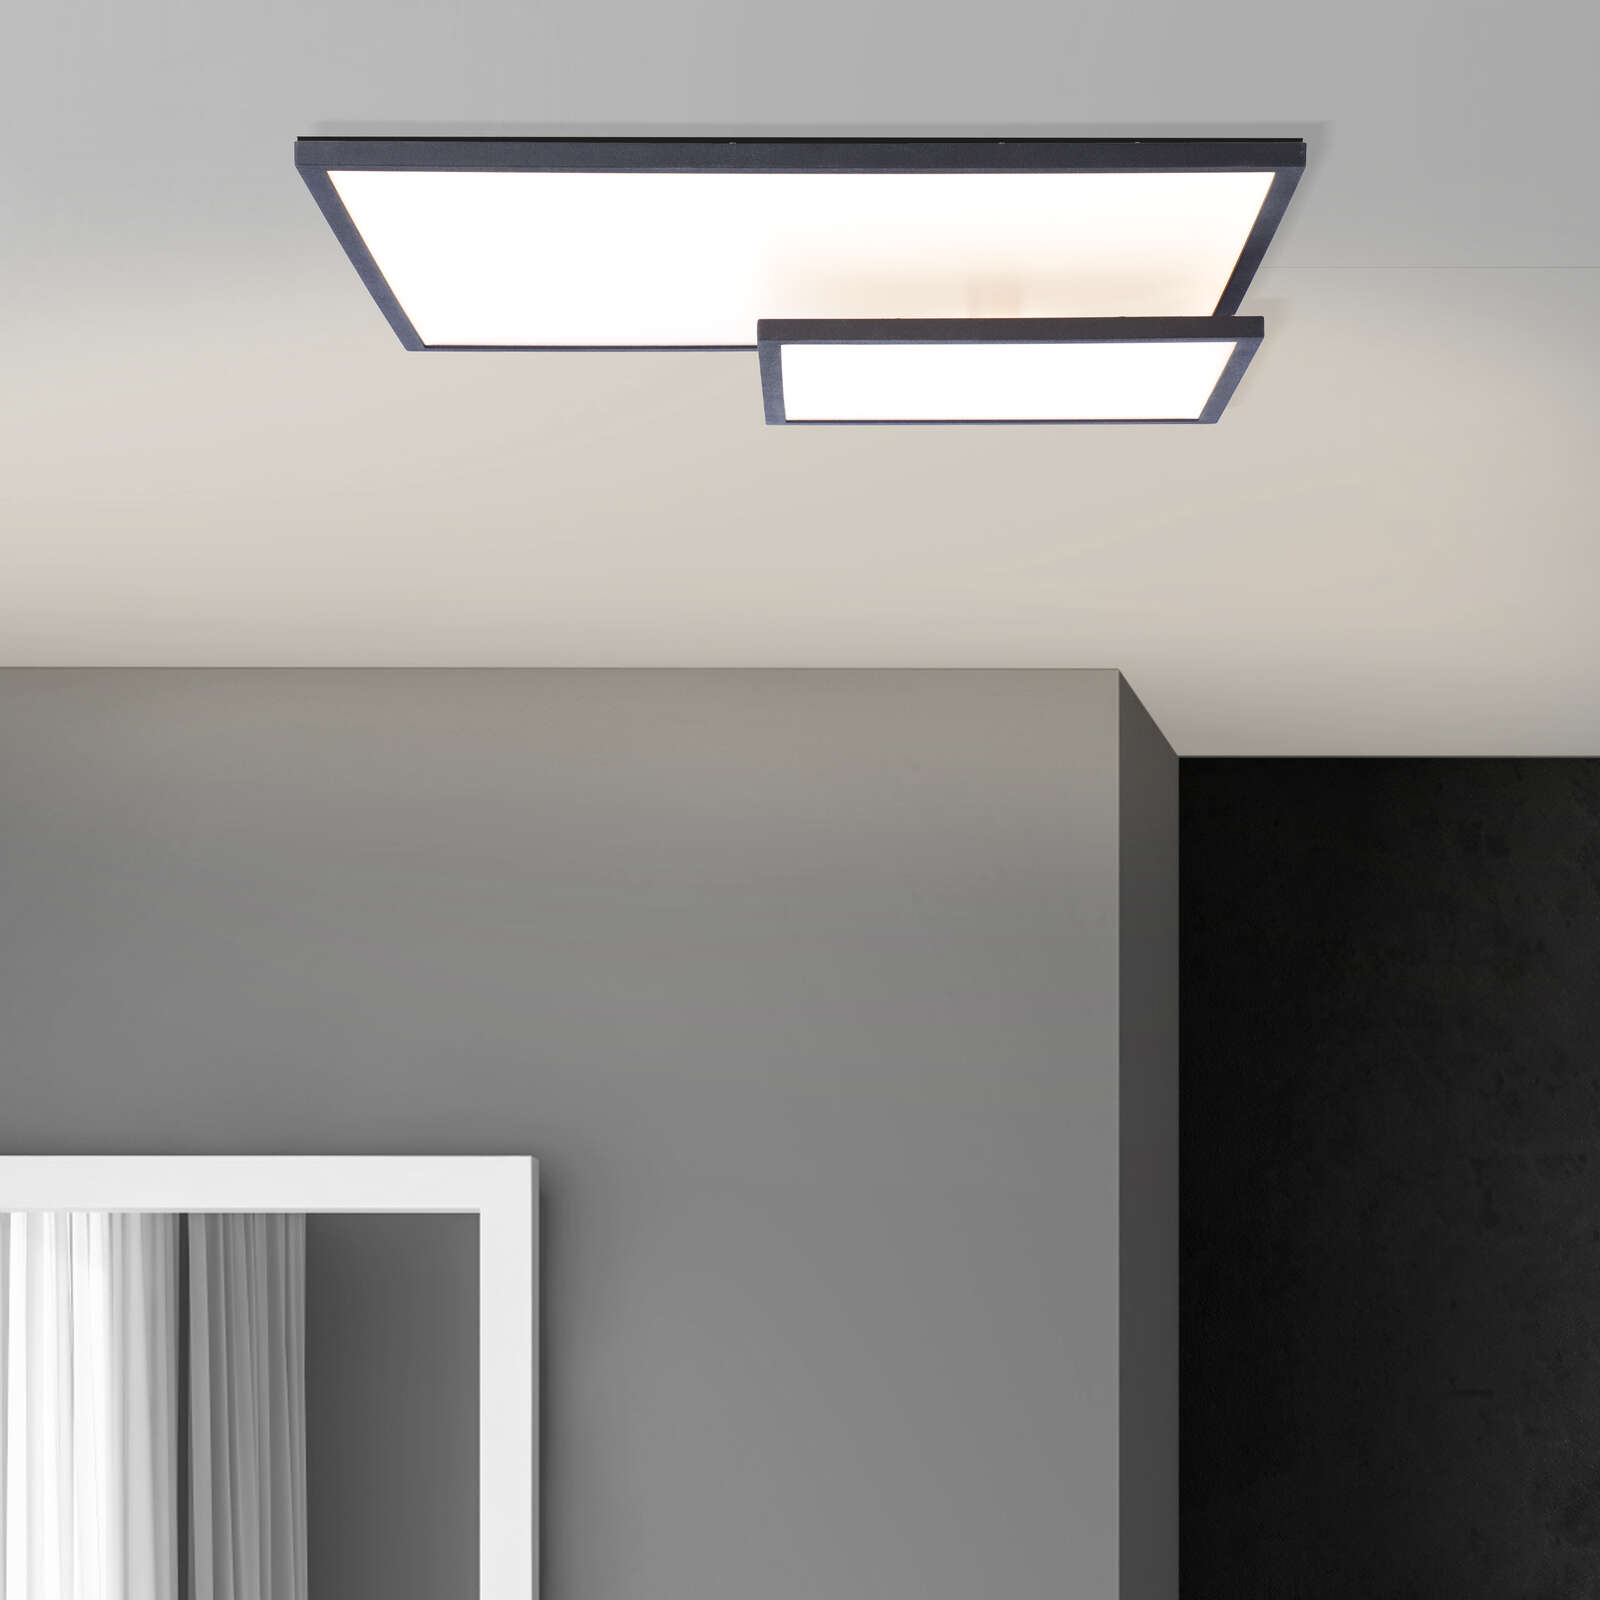             Metalen plafondlamp - Benno 1 - Zwart
        